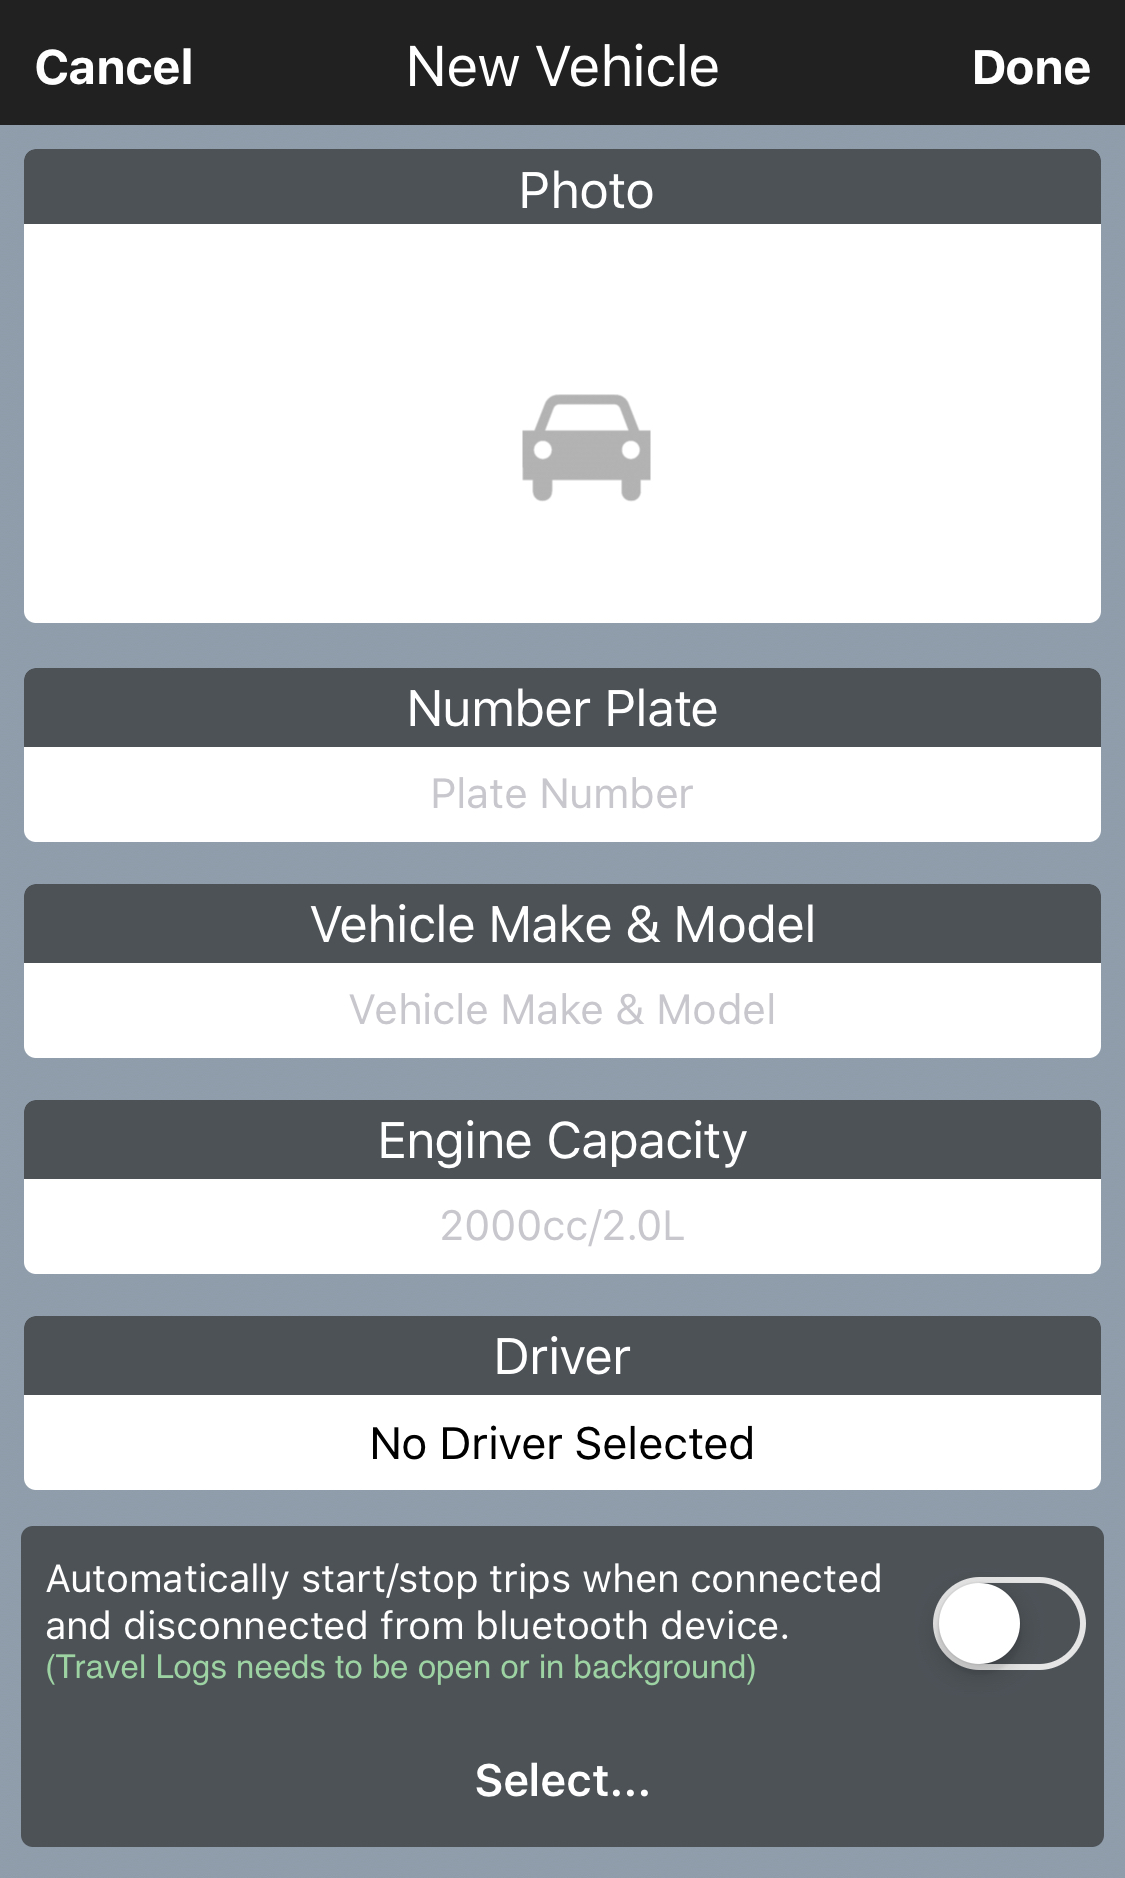 Vehicle Details